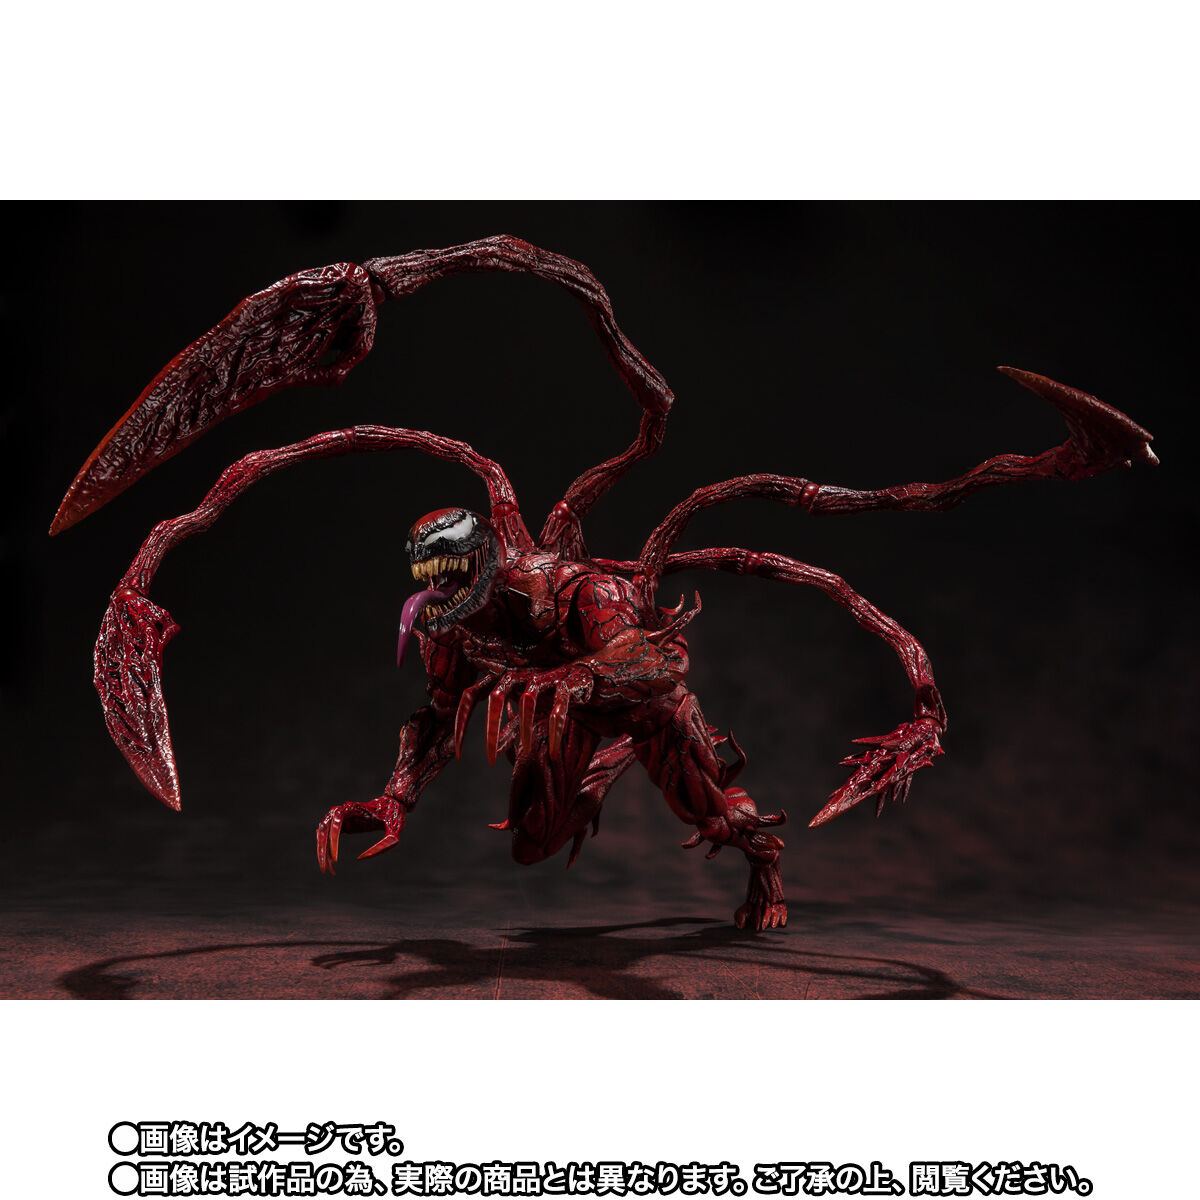 Venom - Figurine S.H. Figuarts Venom Let There Be Carnage 19 cm - Figurine -Discount